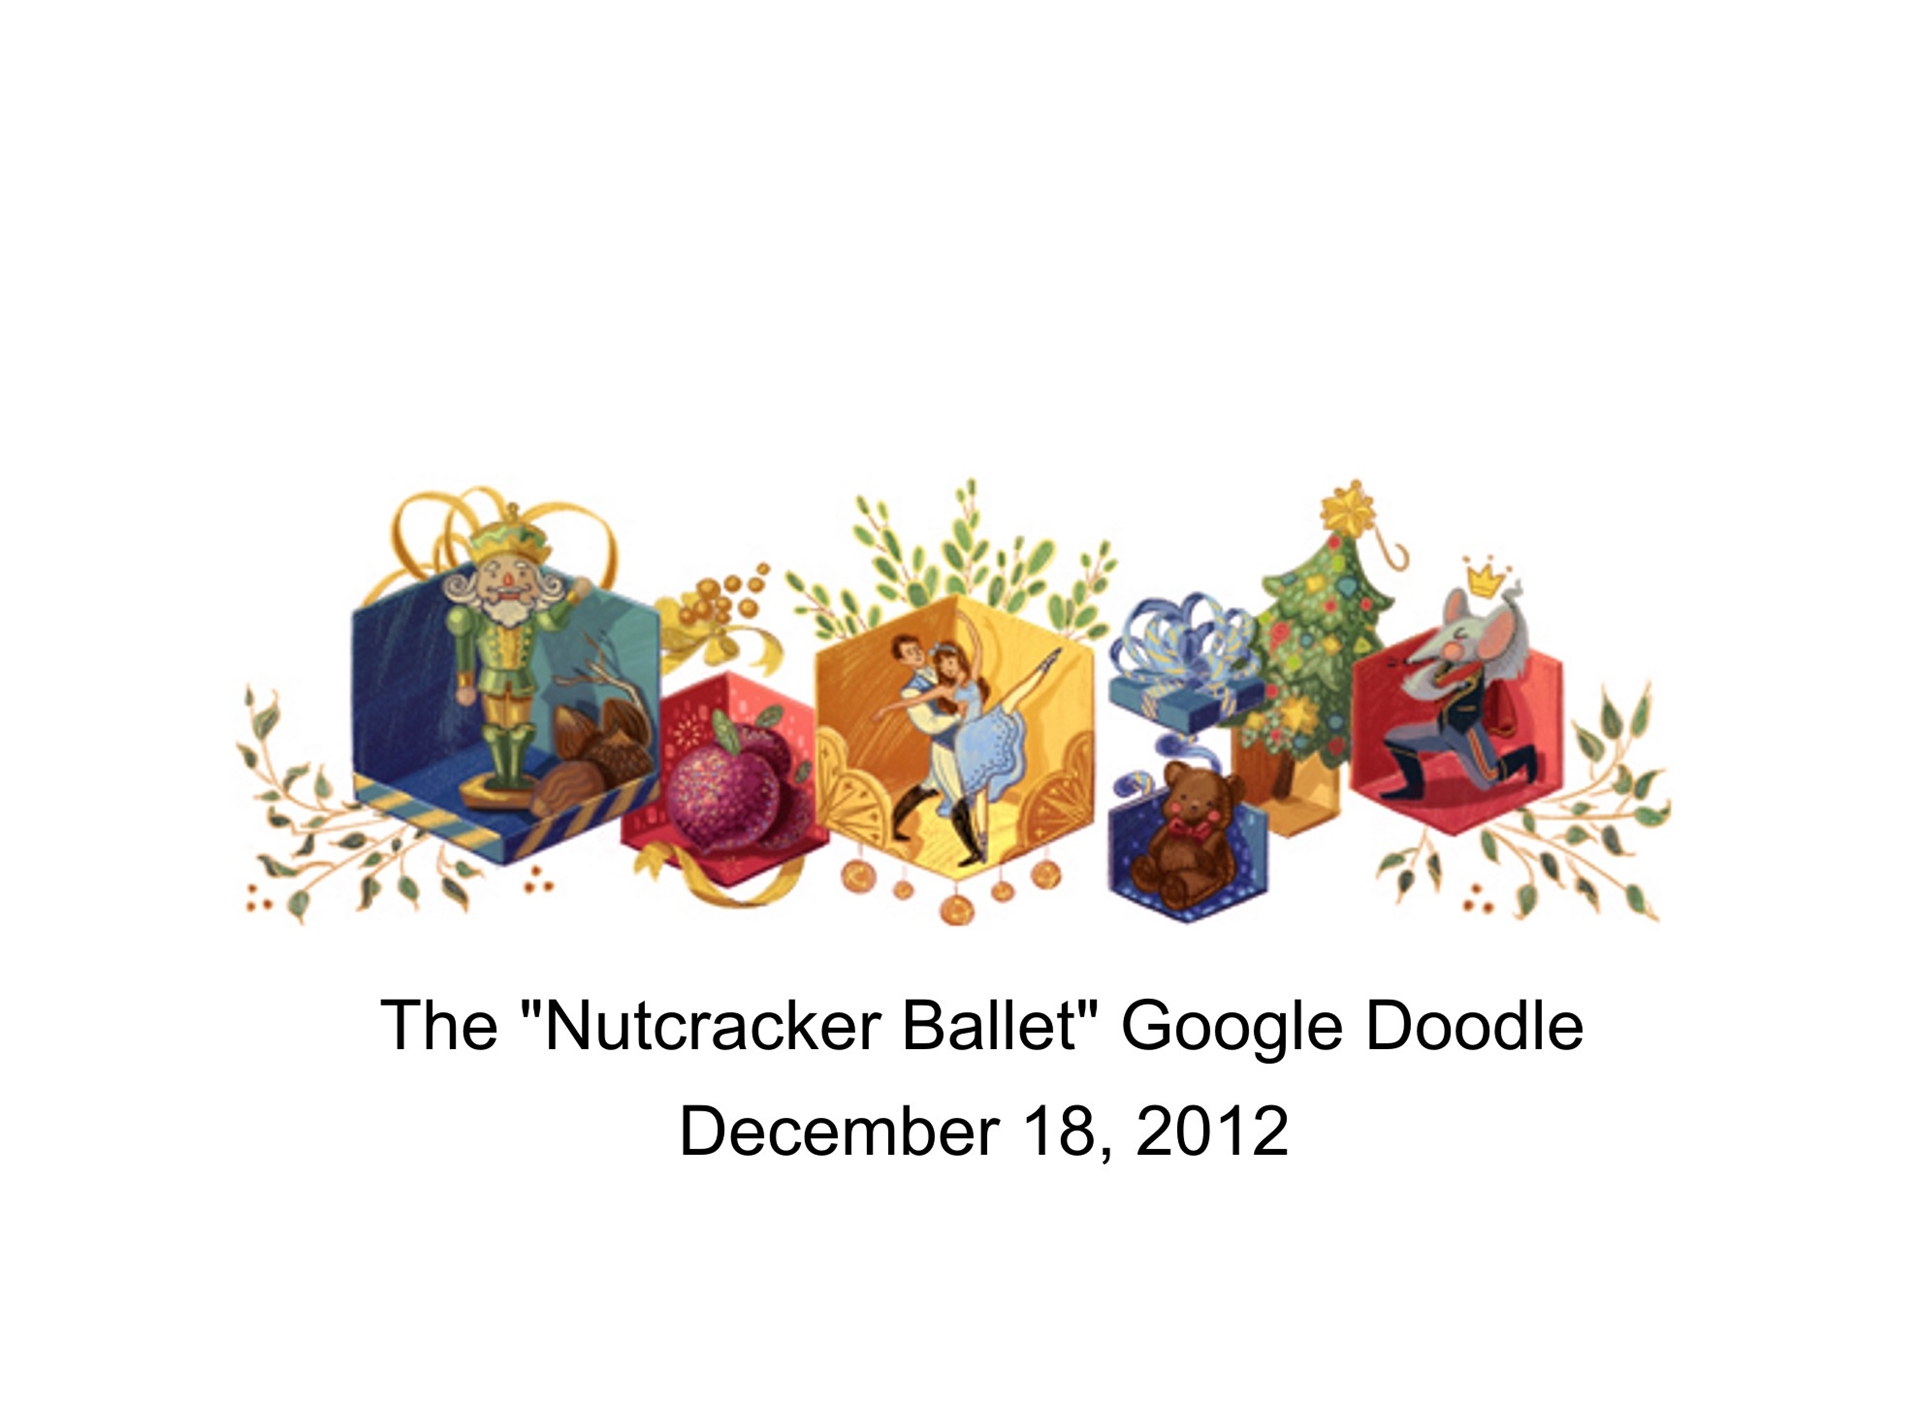 About the Nutcracker Ballet for Christmas Google Doodle